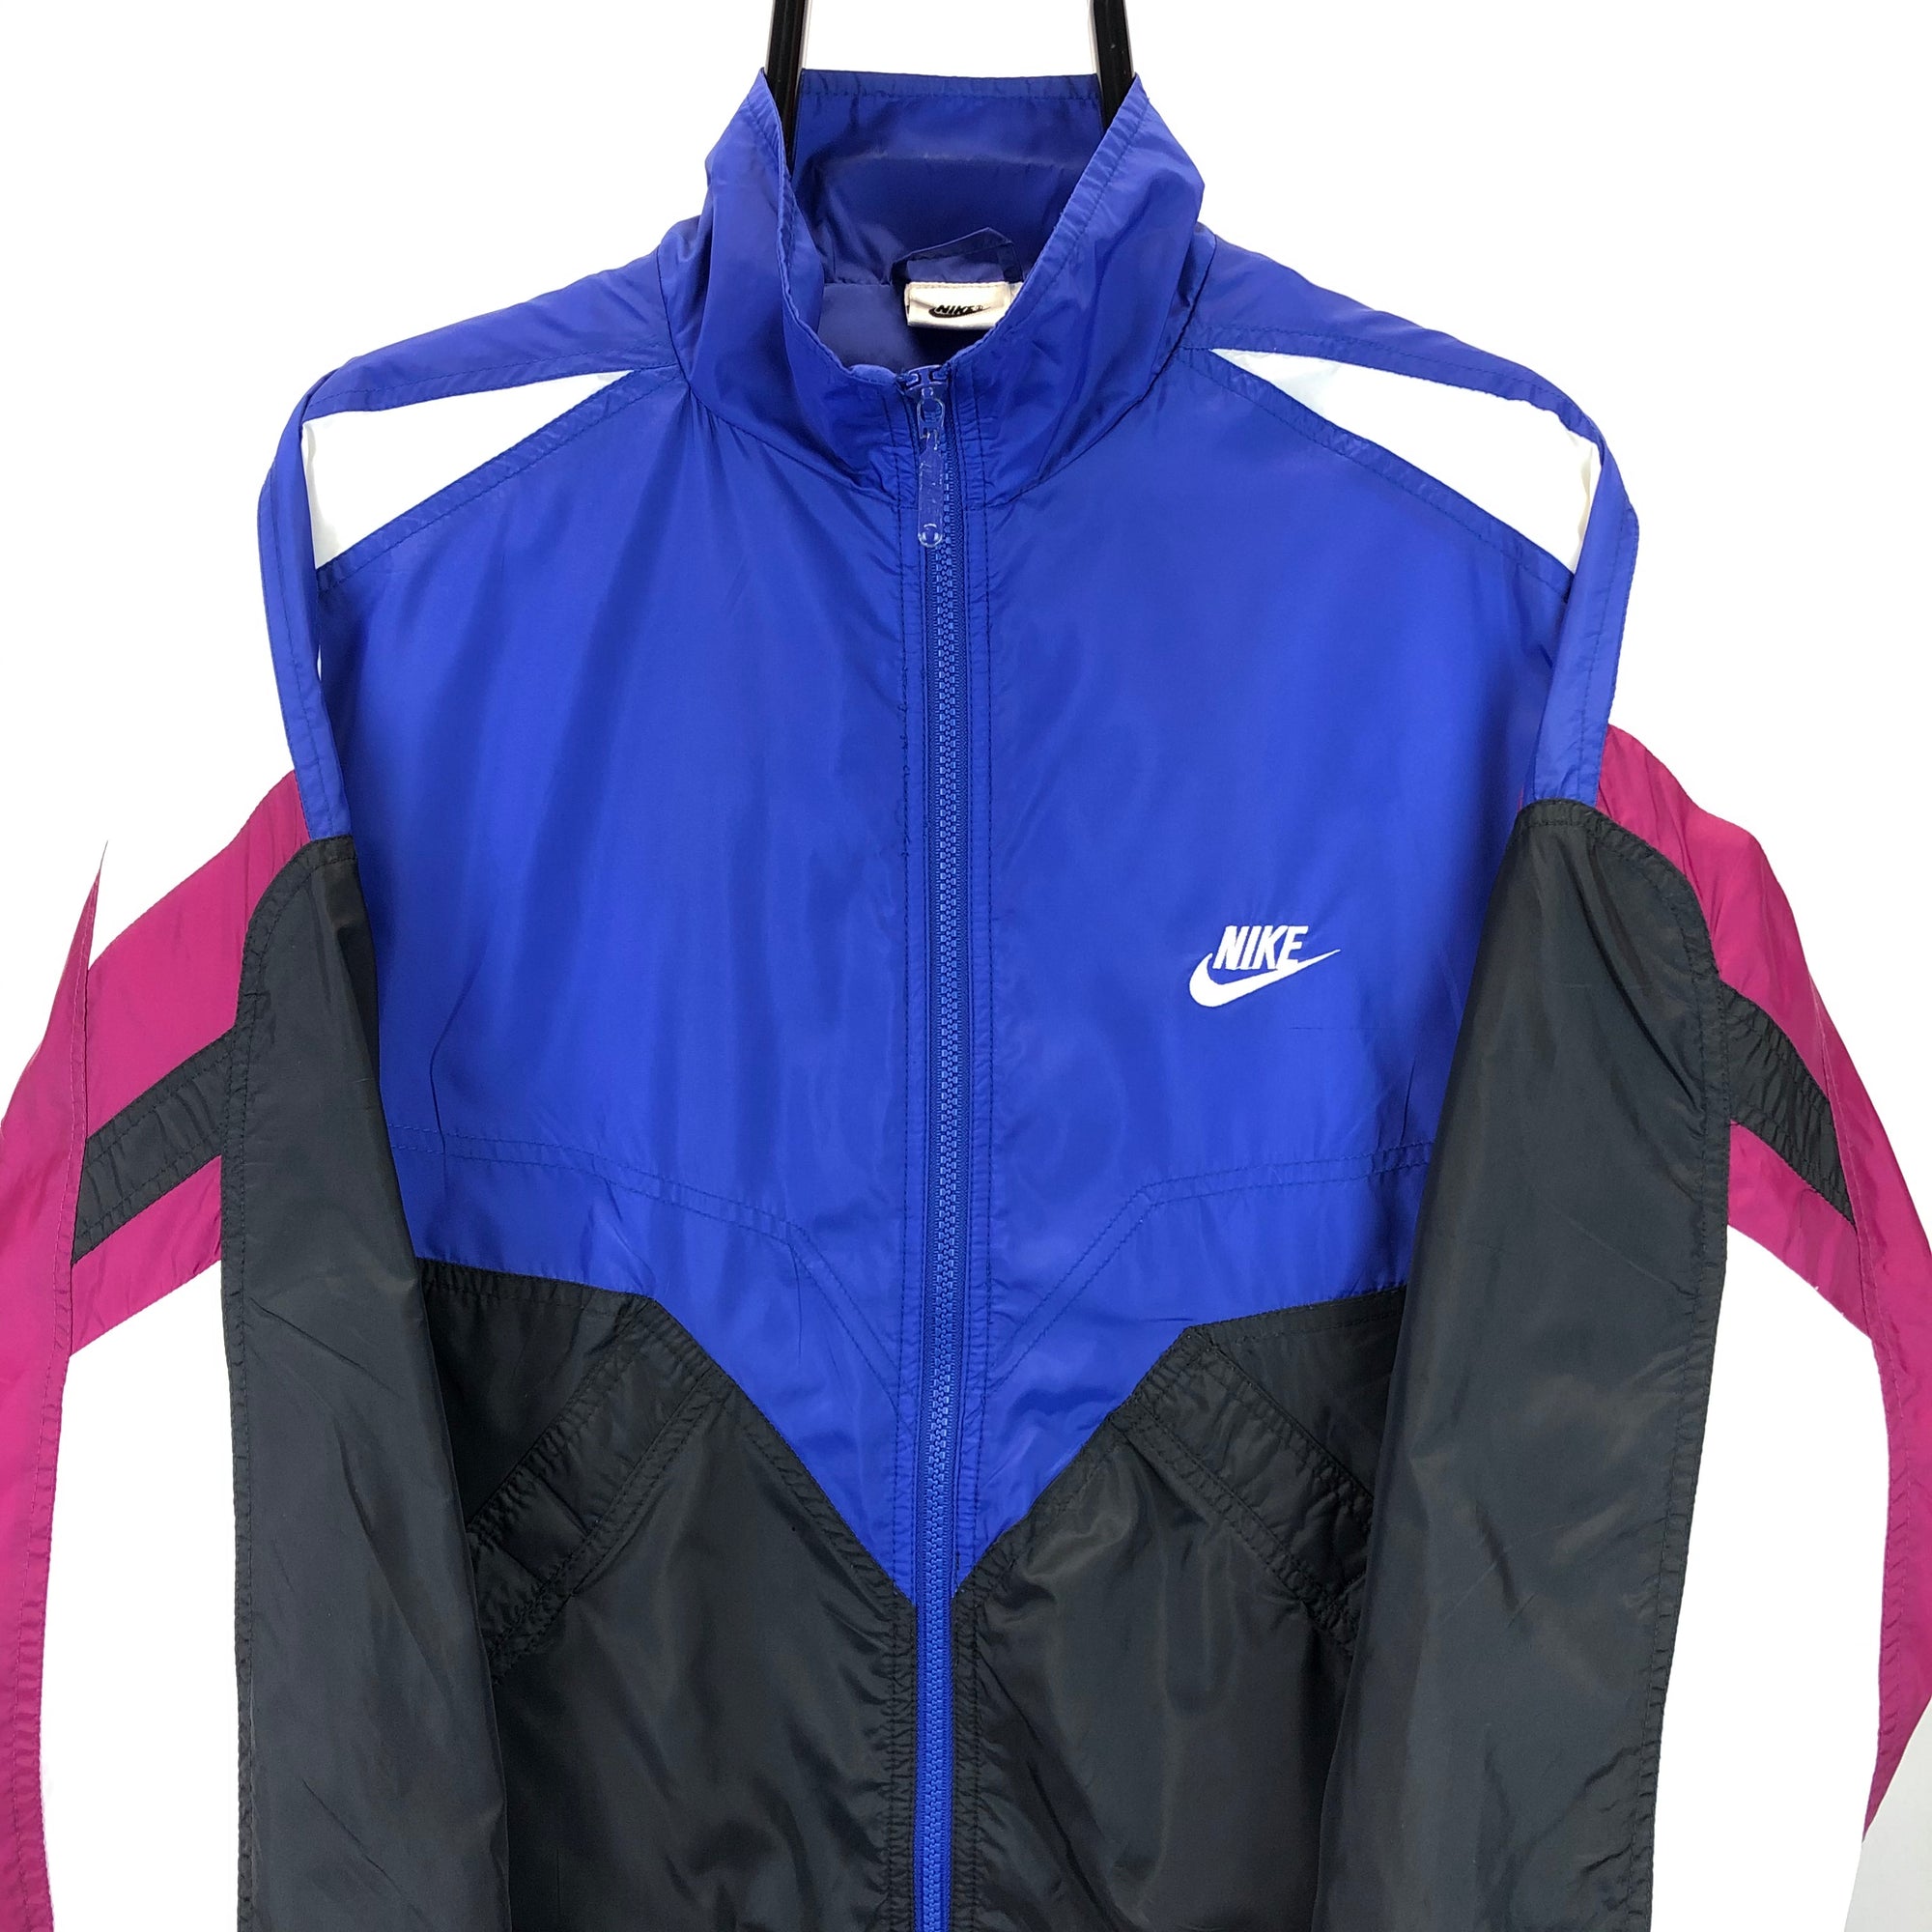 Vintage 90s Nike Quad-Colour Track Jacket - Men's Medium/Women's Large